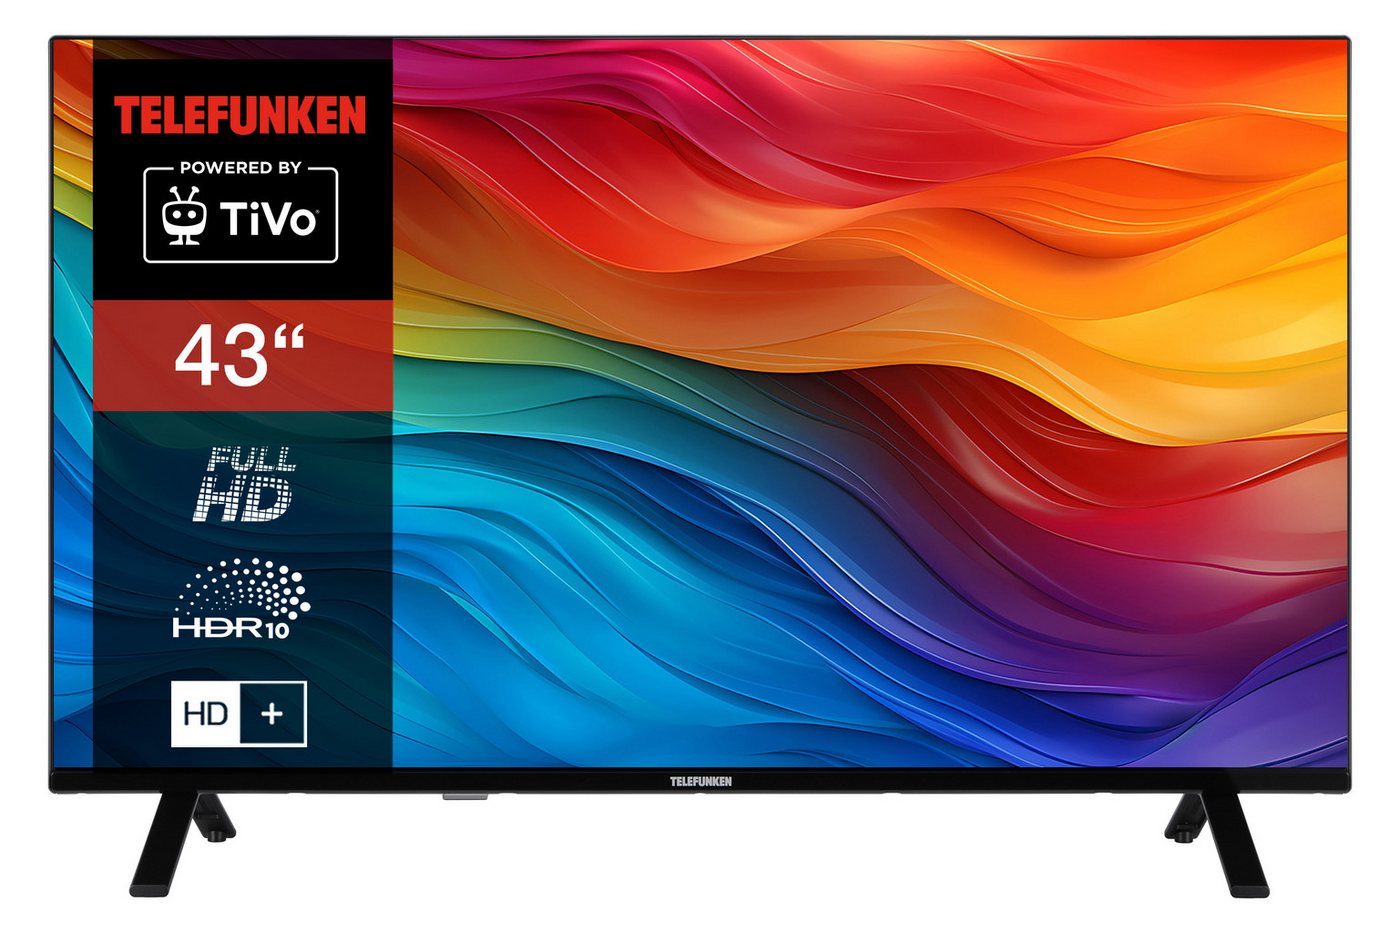 Telefunken XF43TO750S LCD-LED Fernseher (108 cm/43 Zoll, Full HD, TiVo Smart TV, TiVo Smart TV, HDR, Triple-Tuner, Sprachsteuerung, HD+ 6 Monate inkl) von Telefunken